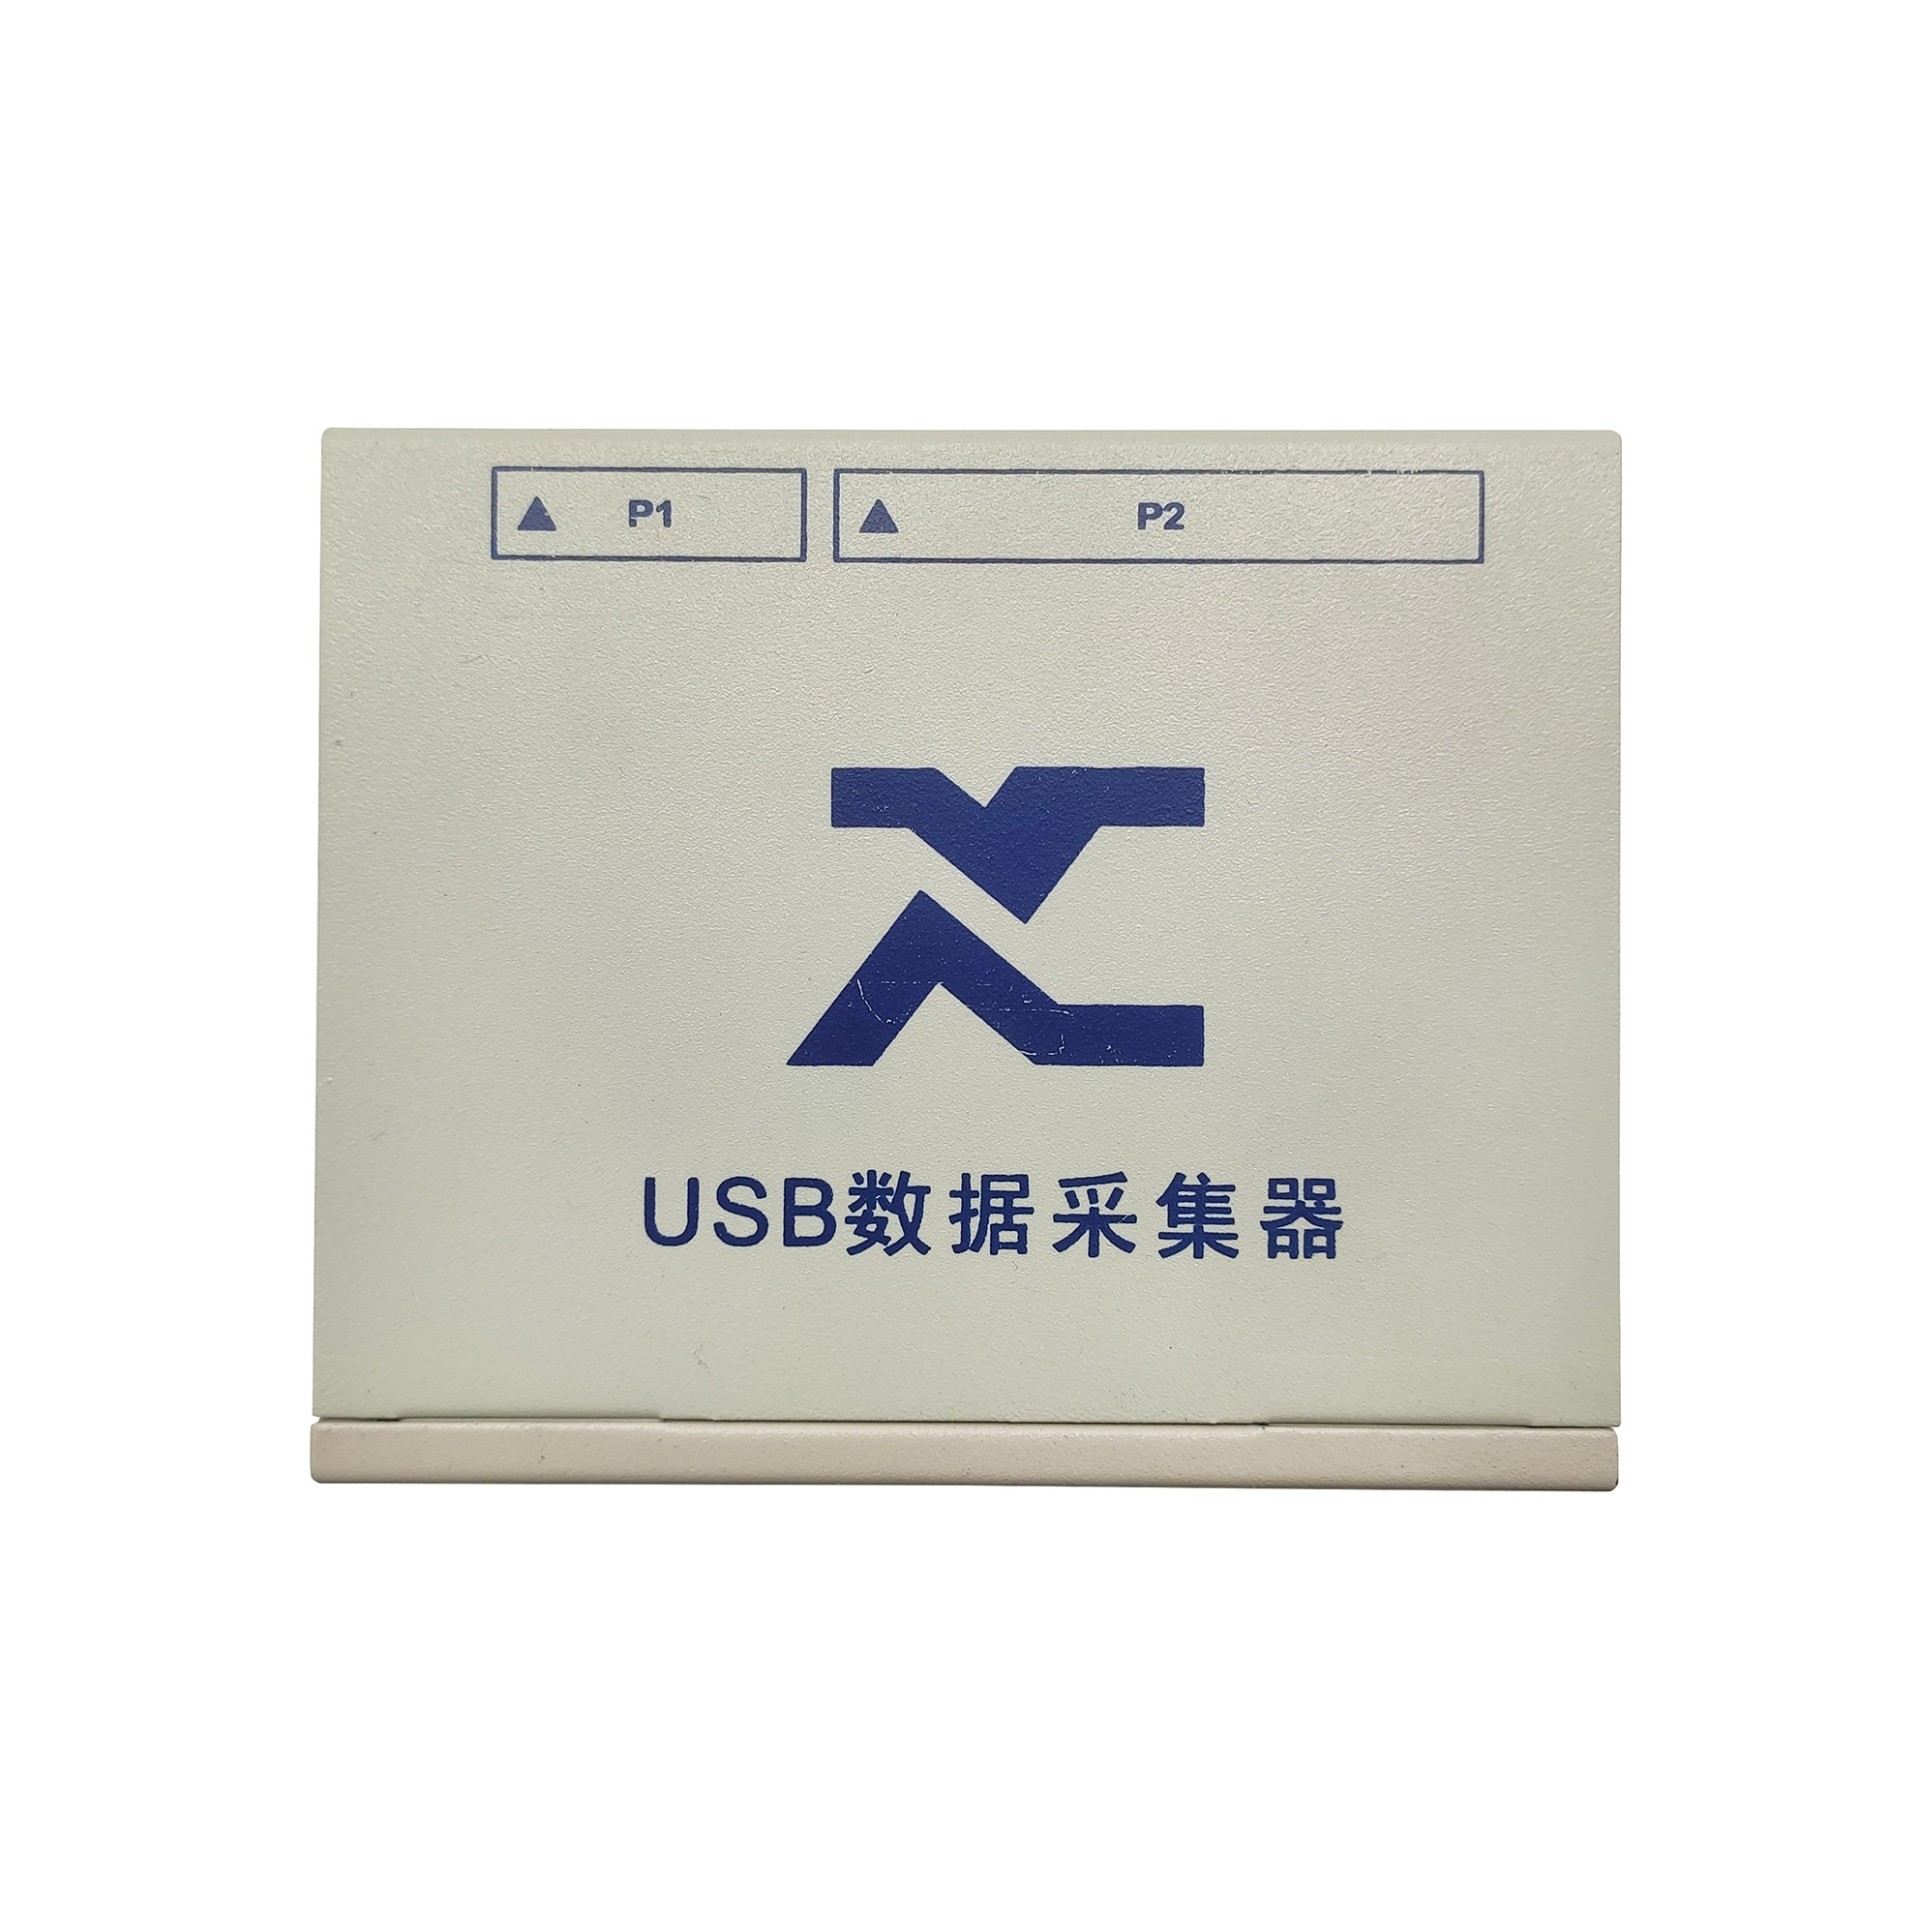 USB-1612M